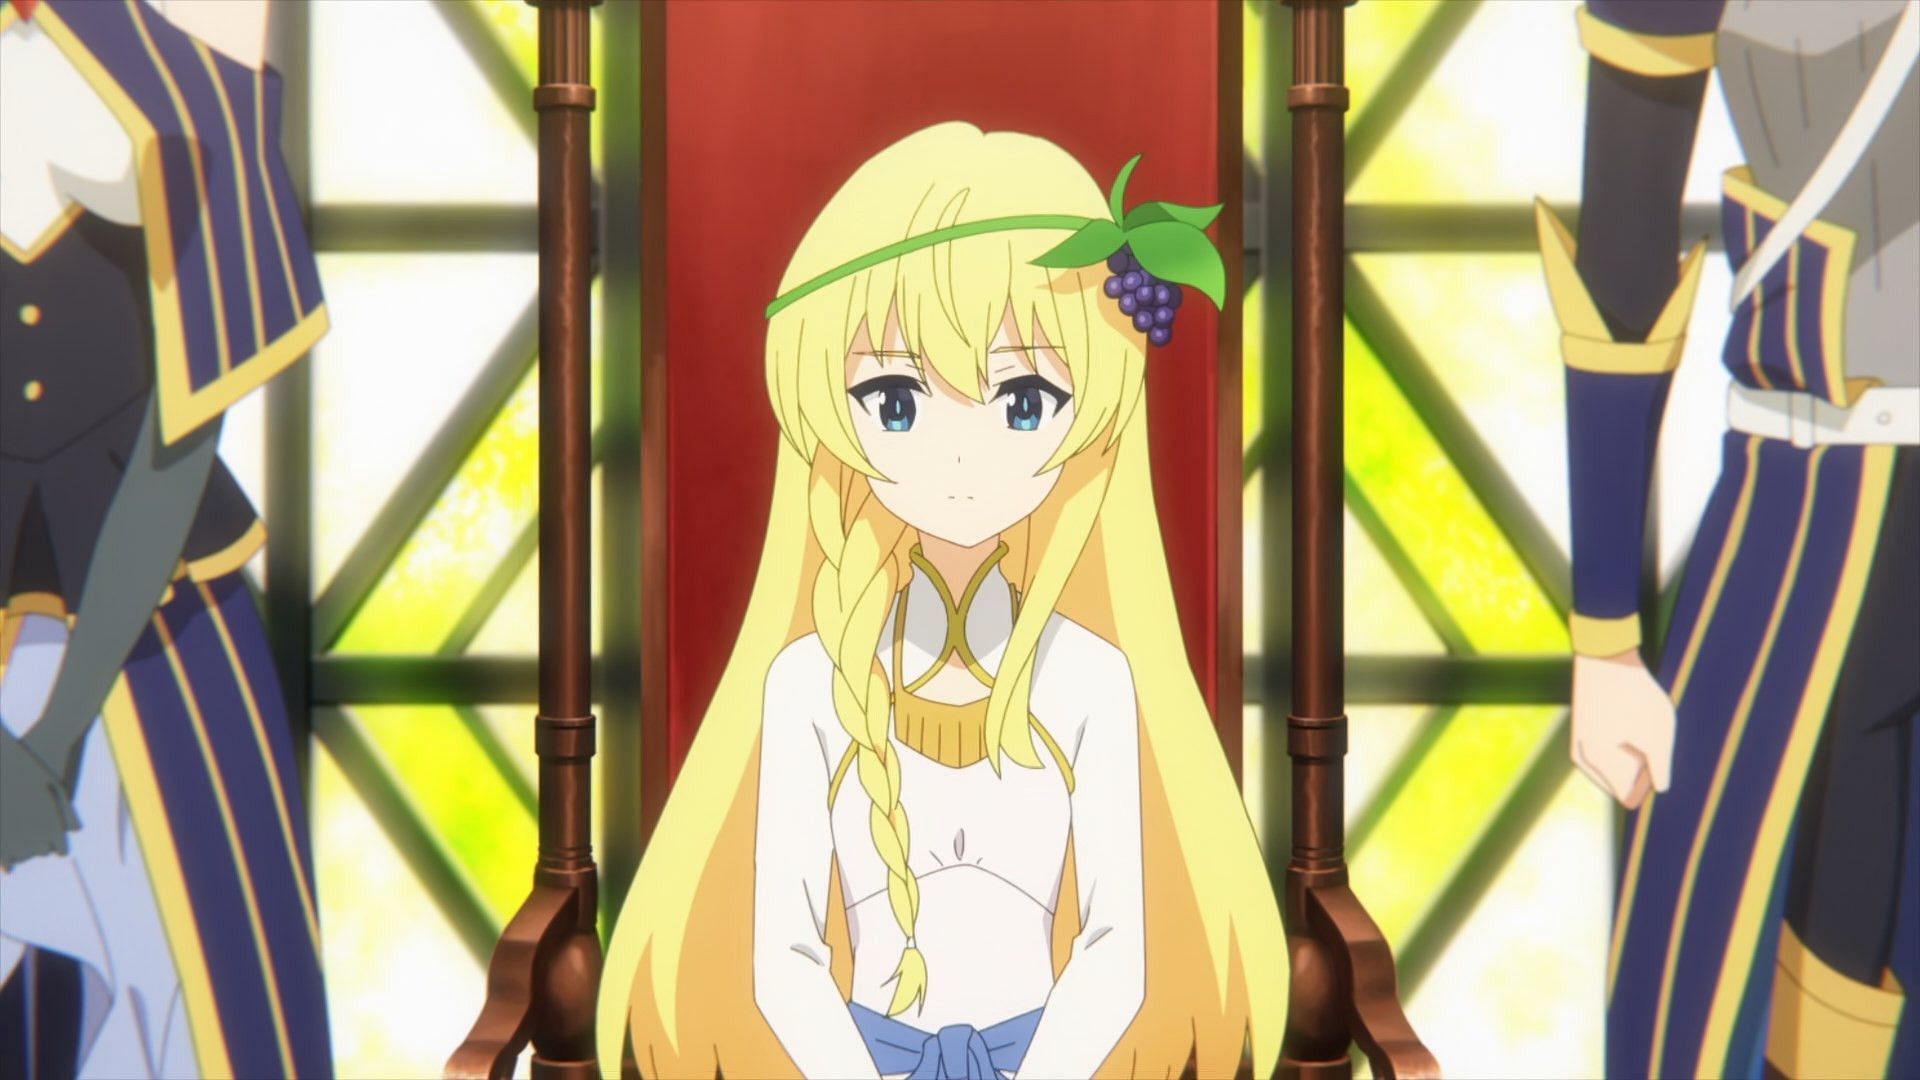 Konosuba season 3 episode 2 officially introduces Princess Iris (Image via Drive)